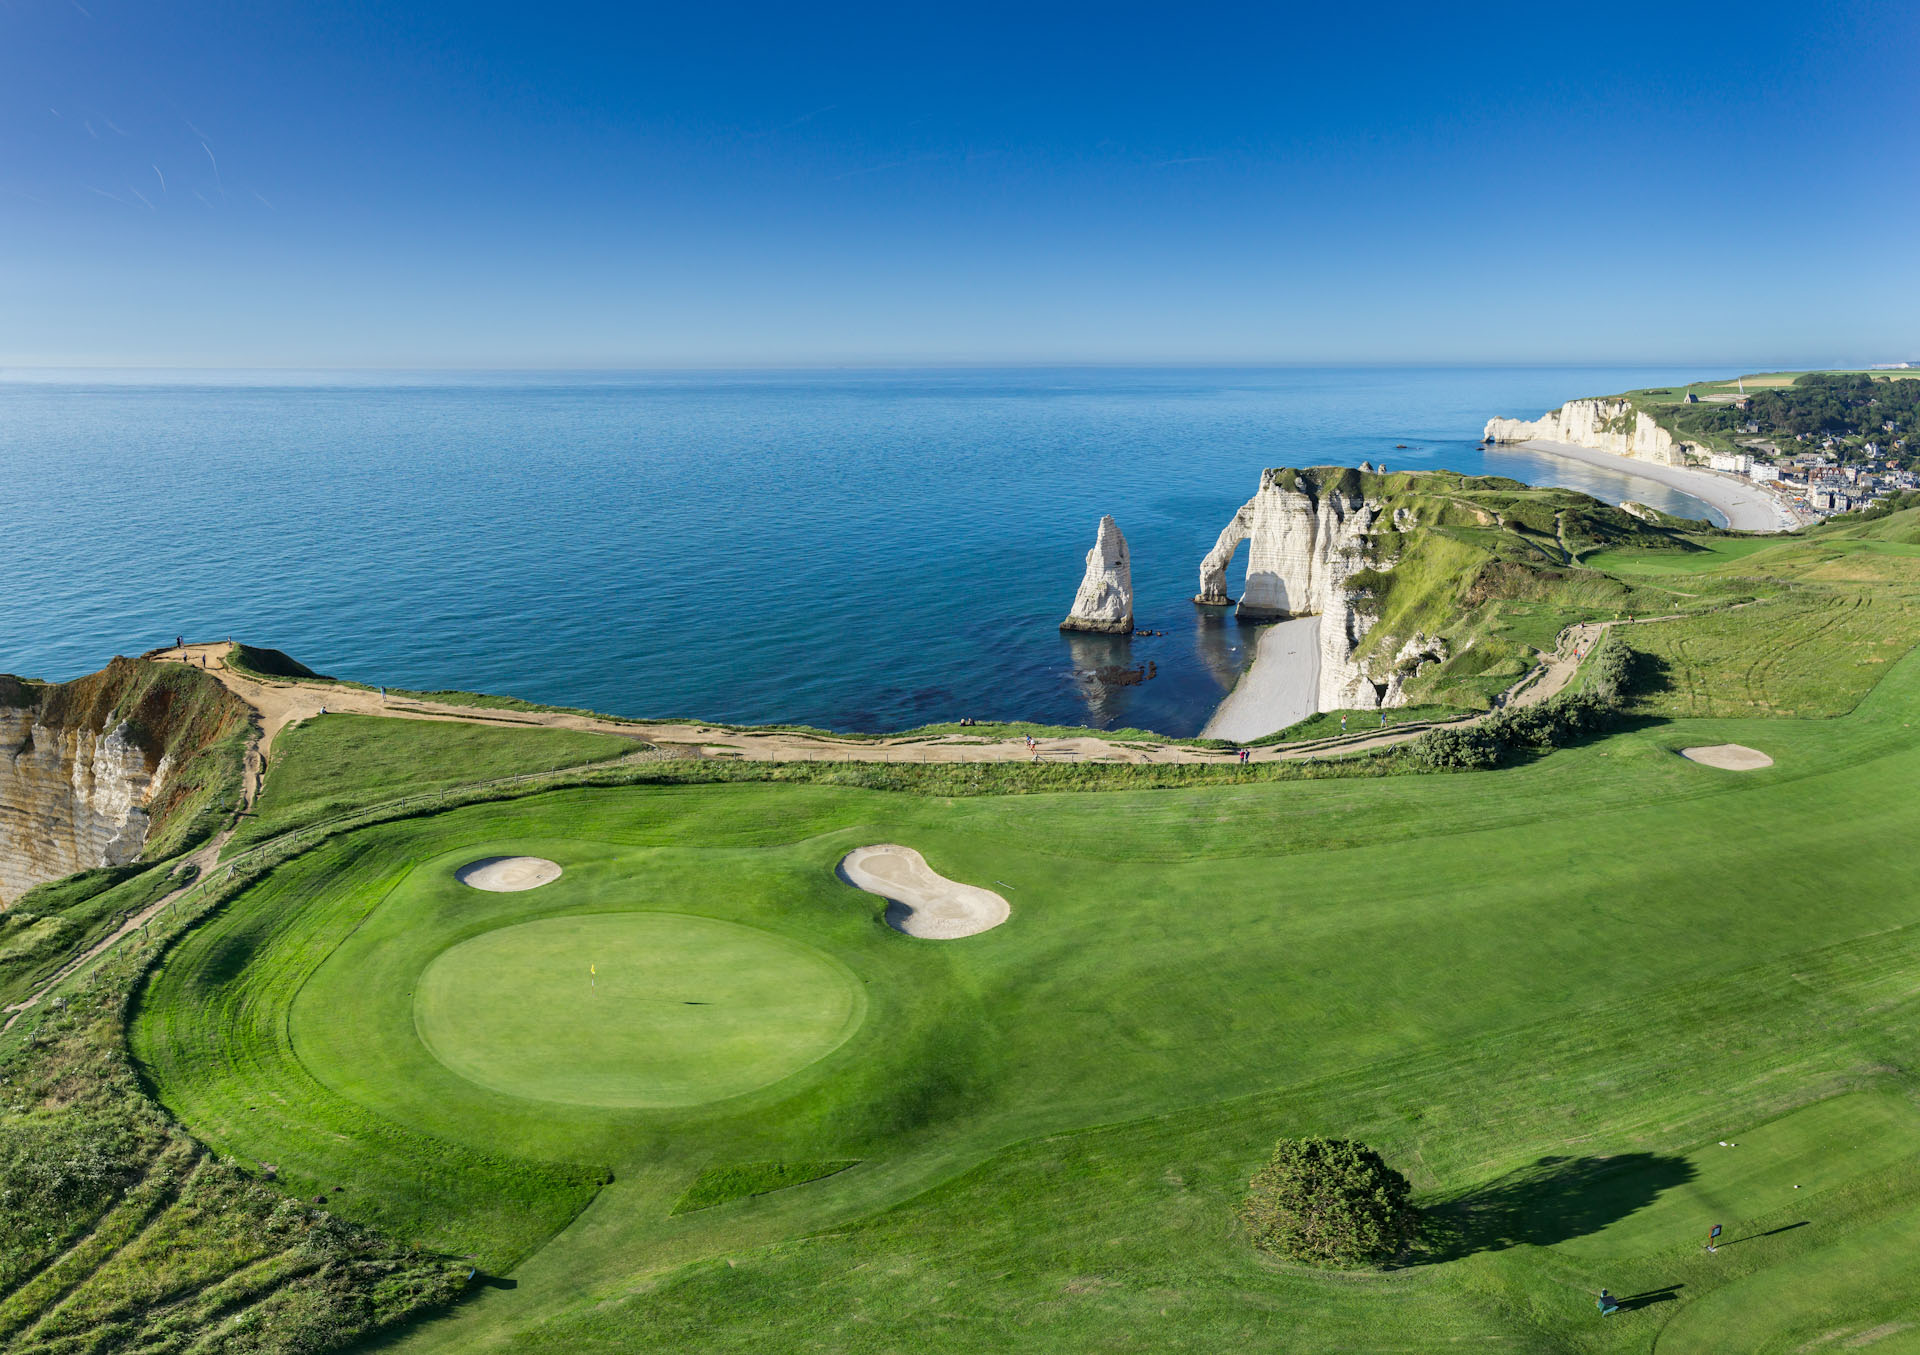 The 12th hole at Etretat Golf Club, Normandy, France